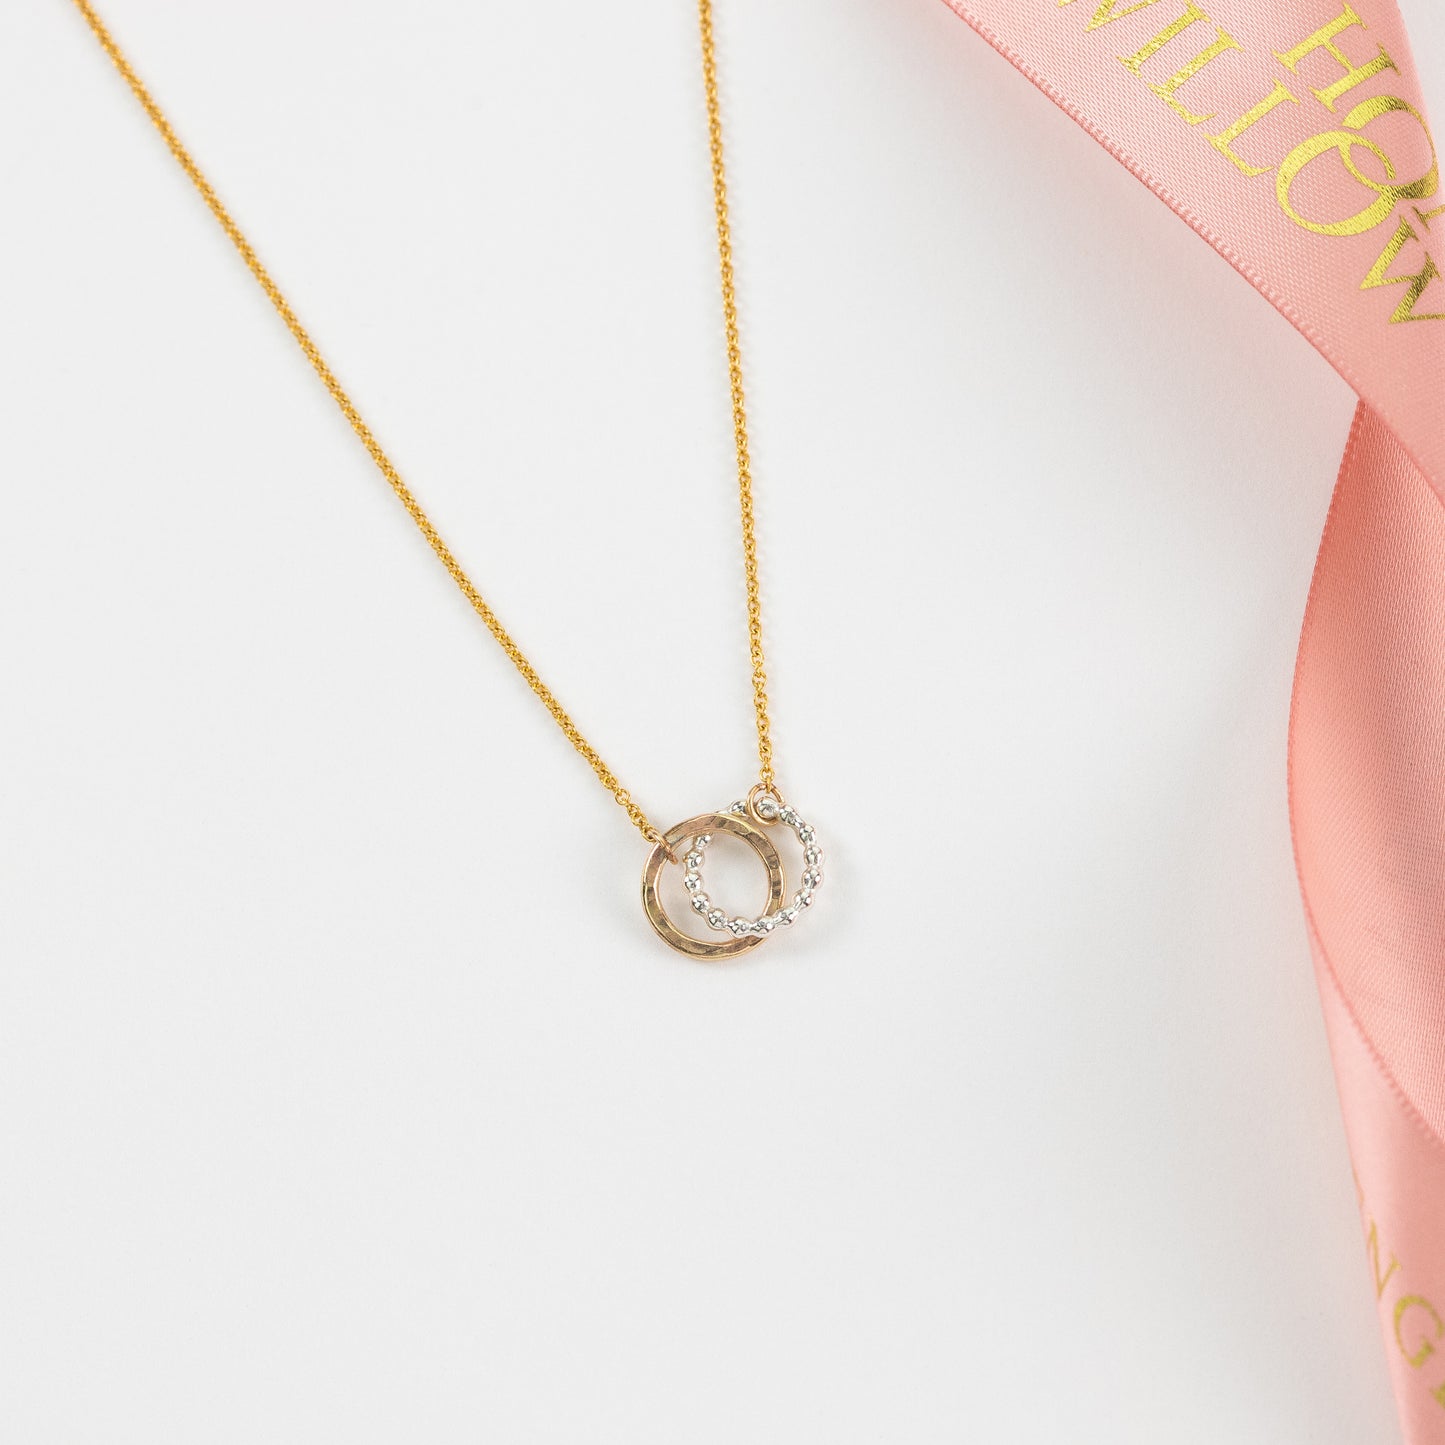 Jane Austen Inspired - Love Link Necklace - Silver & Gold